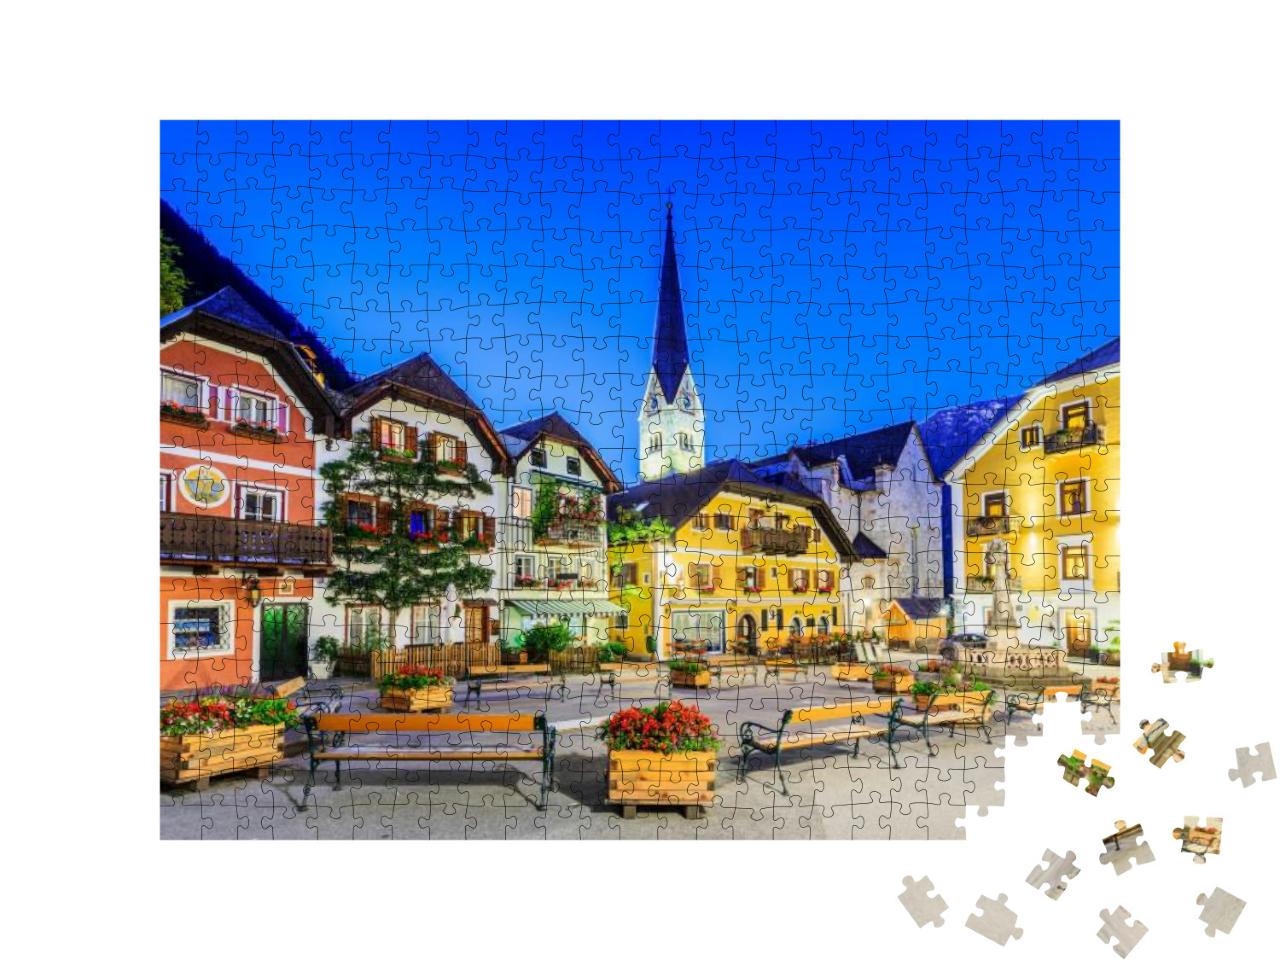 Hallstatt, Austria. Mountain Village in the Austrian Alps... Jigsaw Puzzle with 500 pieces